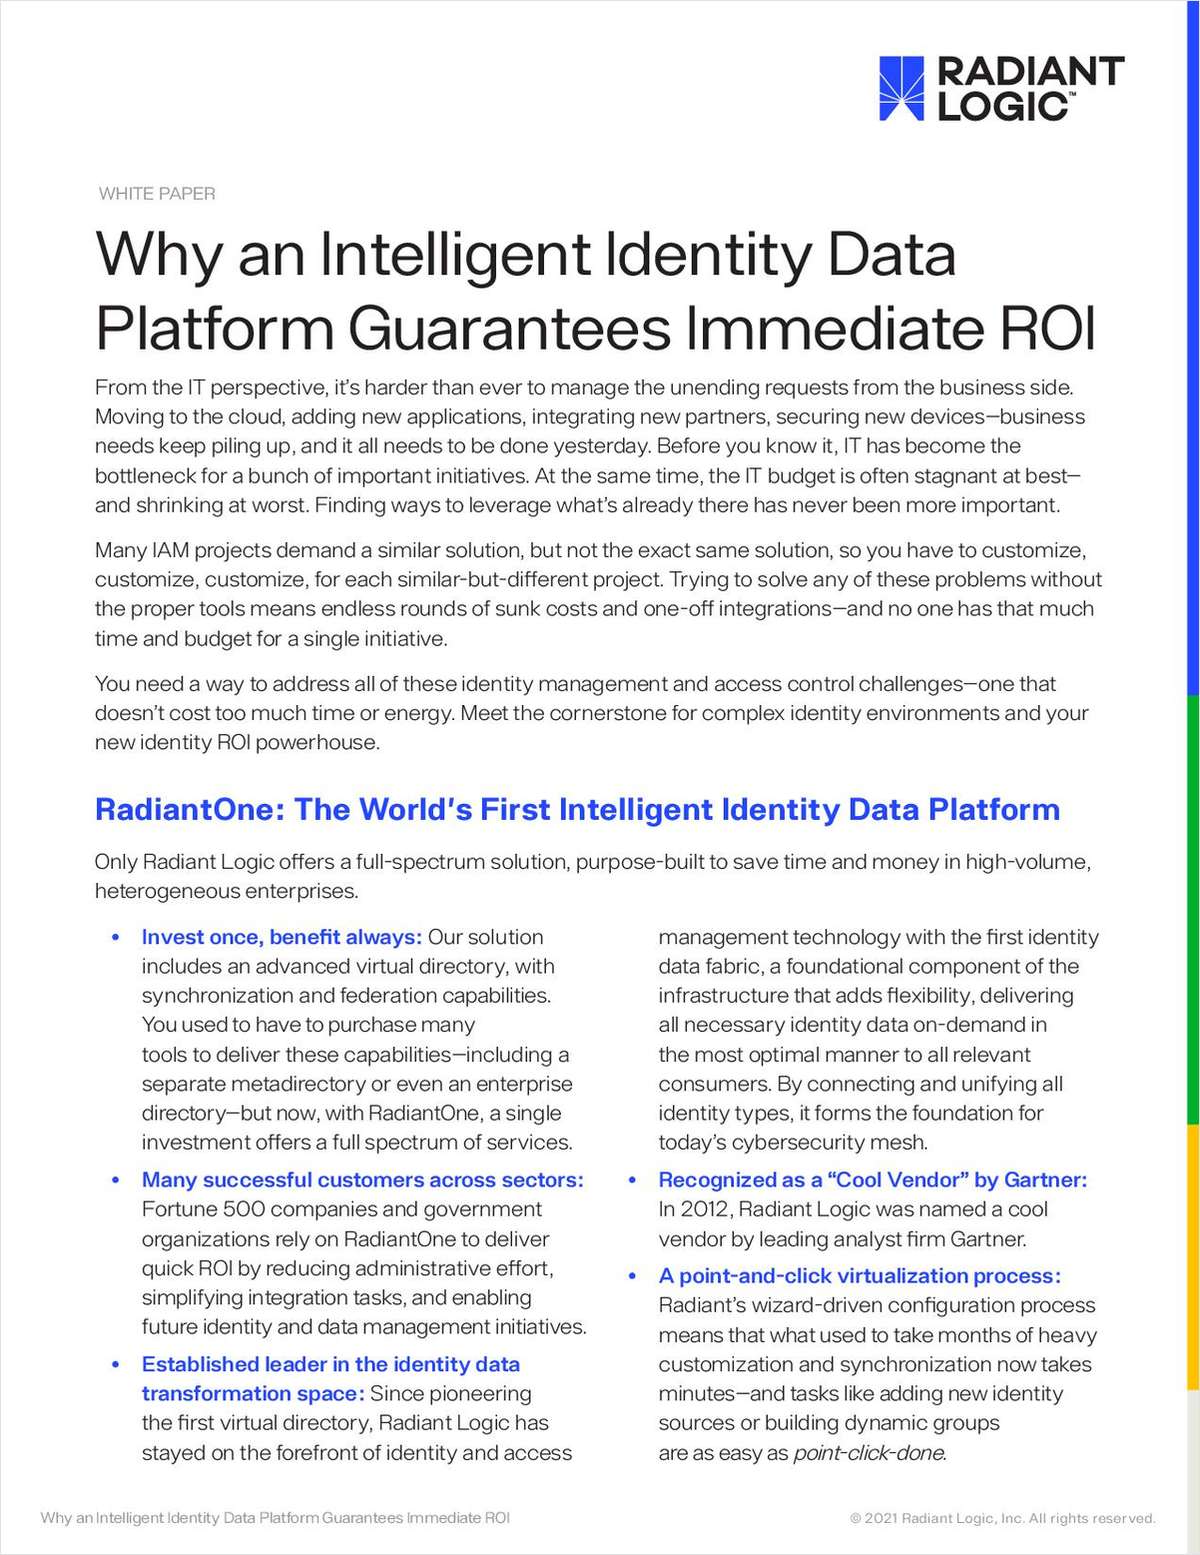 Why an Intelligent Identity Data Platform Guarantees Immediate ROI